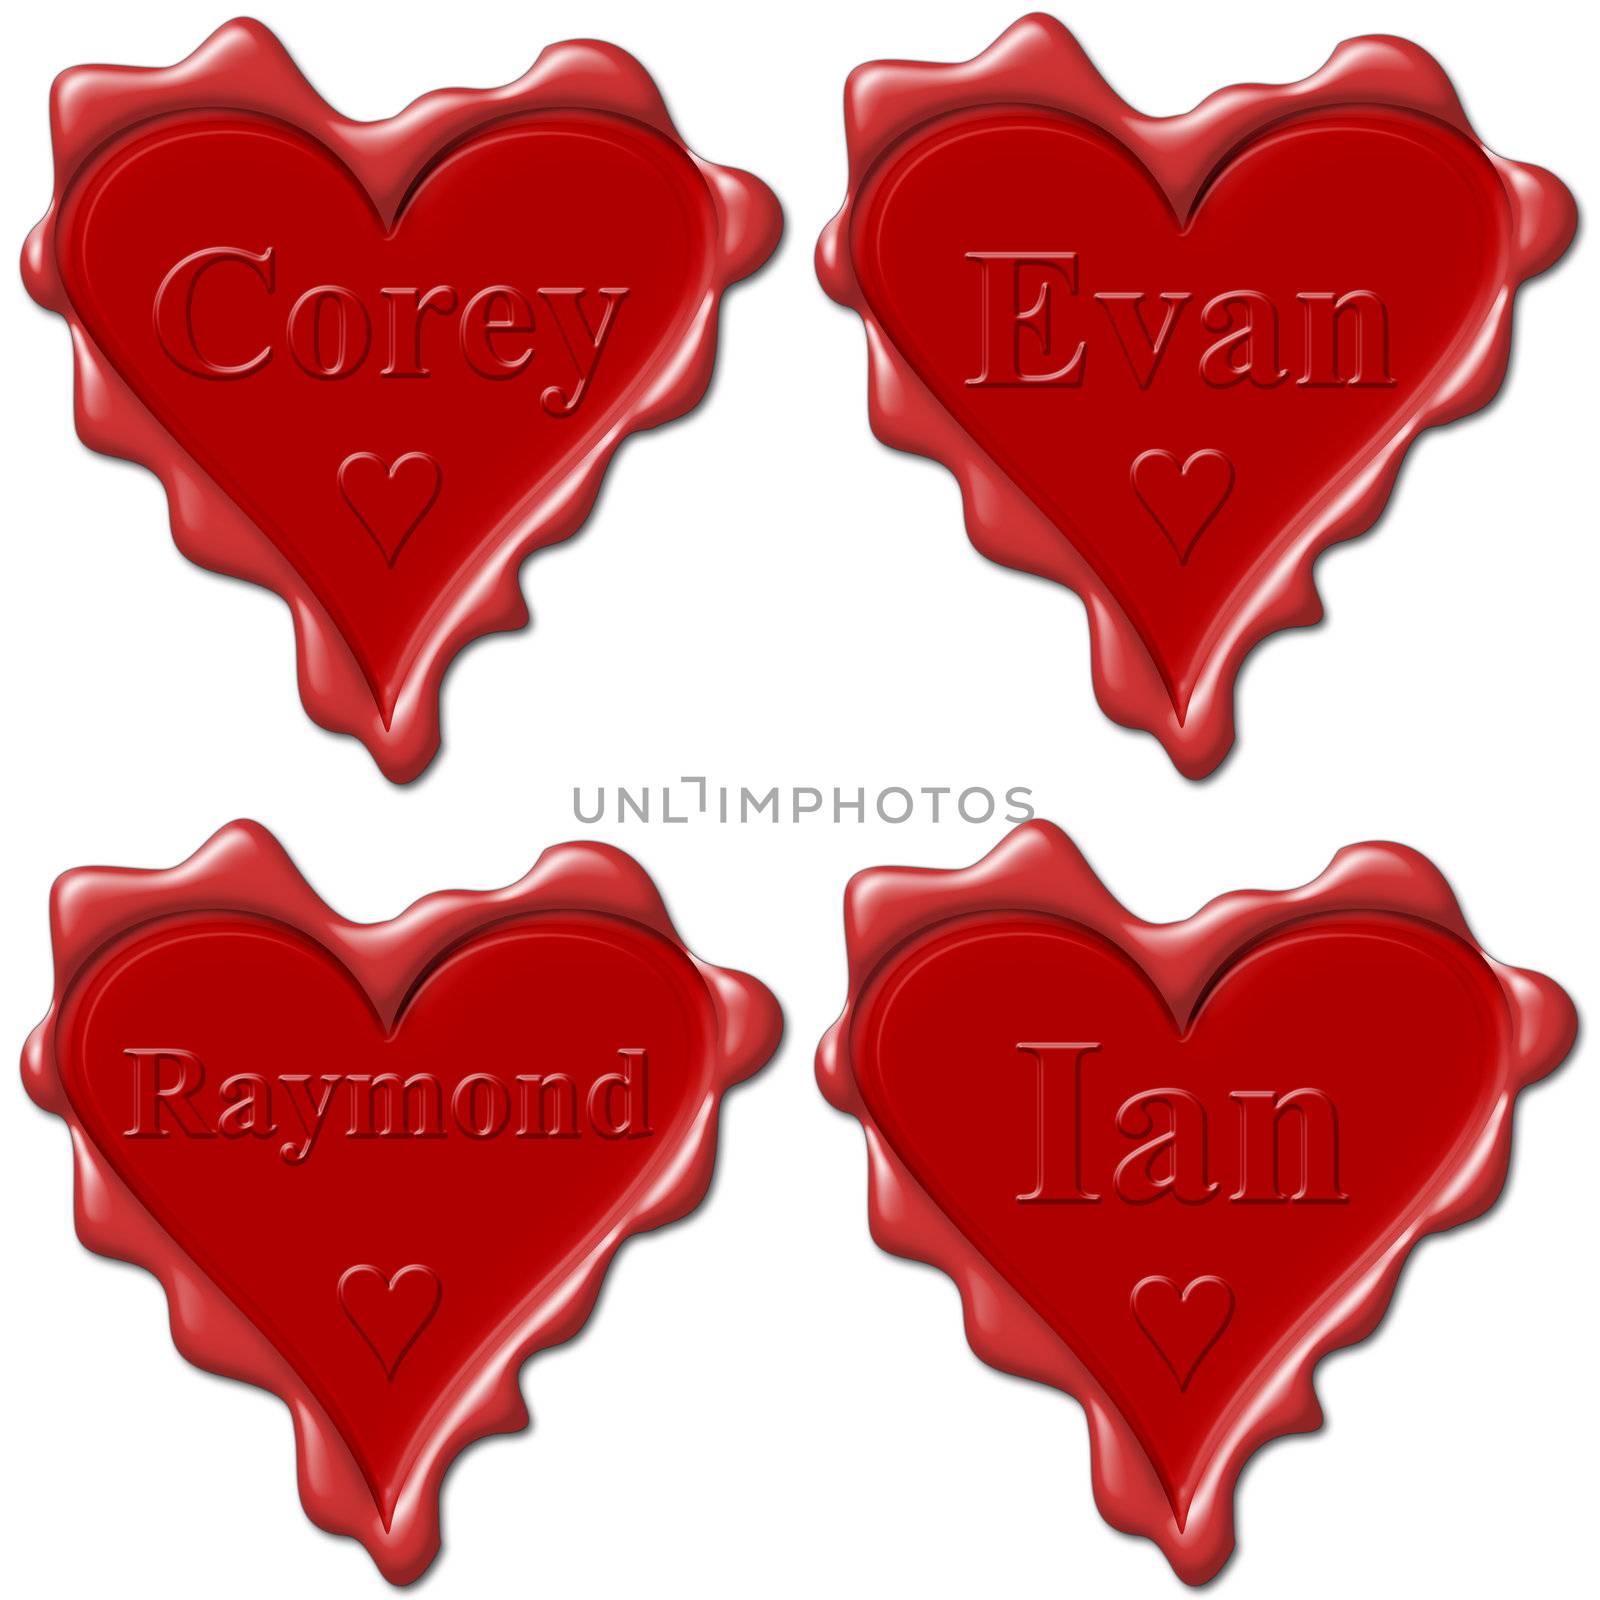 Valentine love hearts with names: Corey, Evan, Raymond, Ian